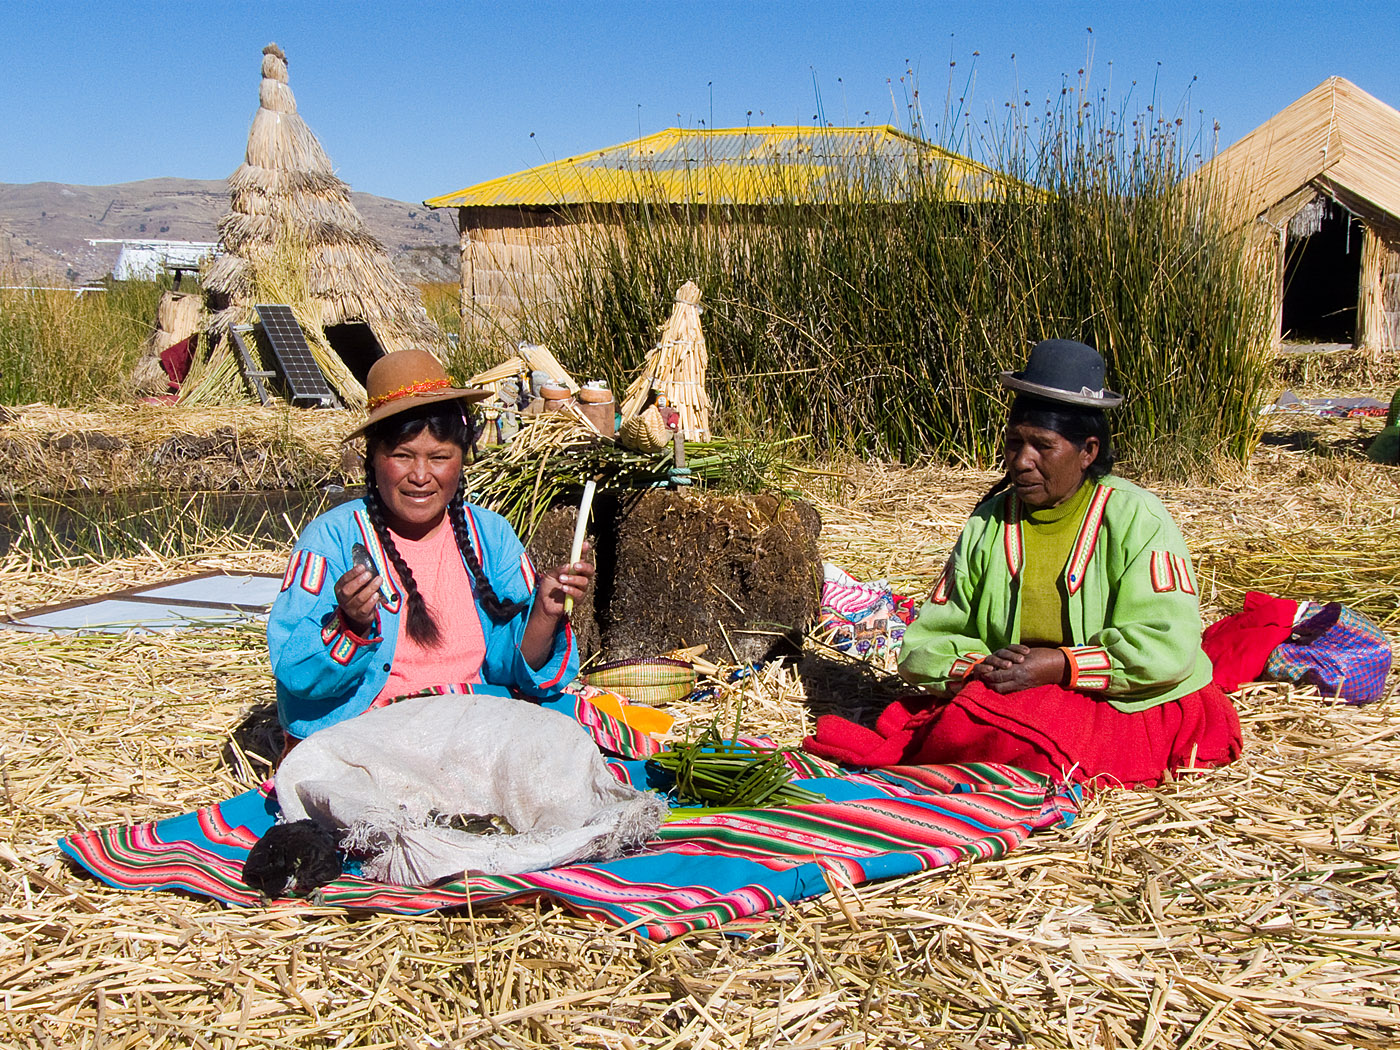 Uros people on Floating Islands, Lake Titicaca